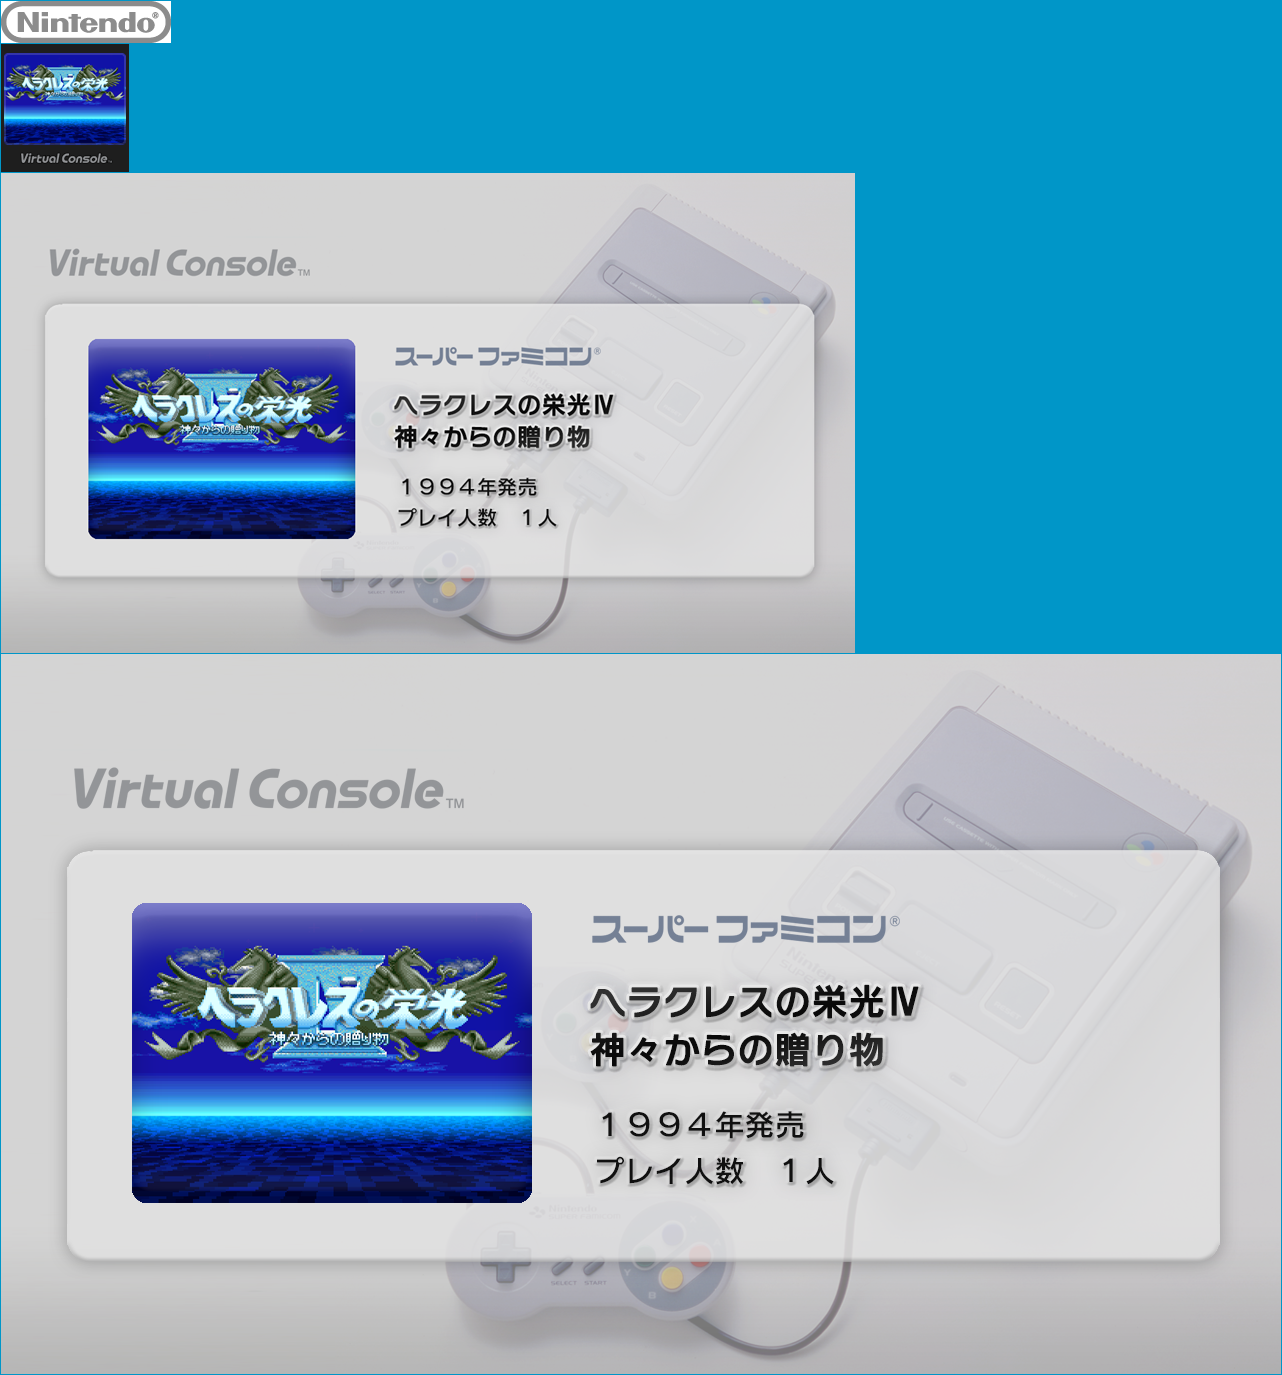 Virtual Console - Heracles no Eikō IV: Kamigami kara no Okurimono